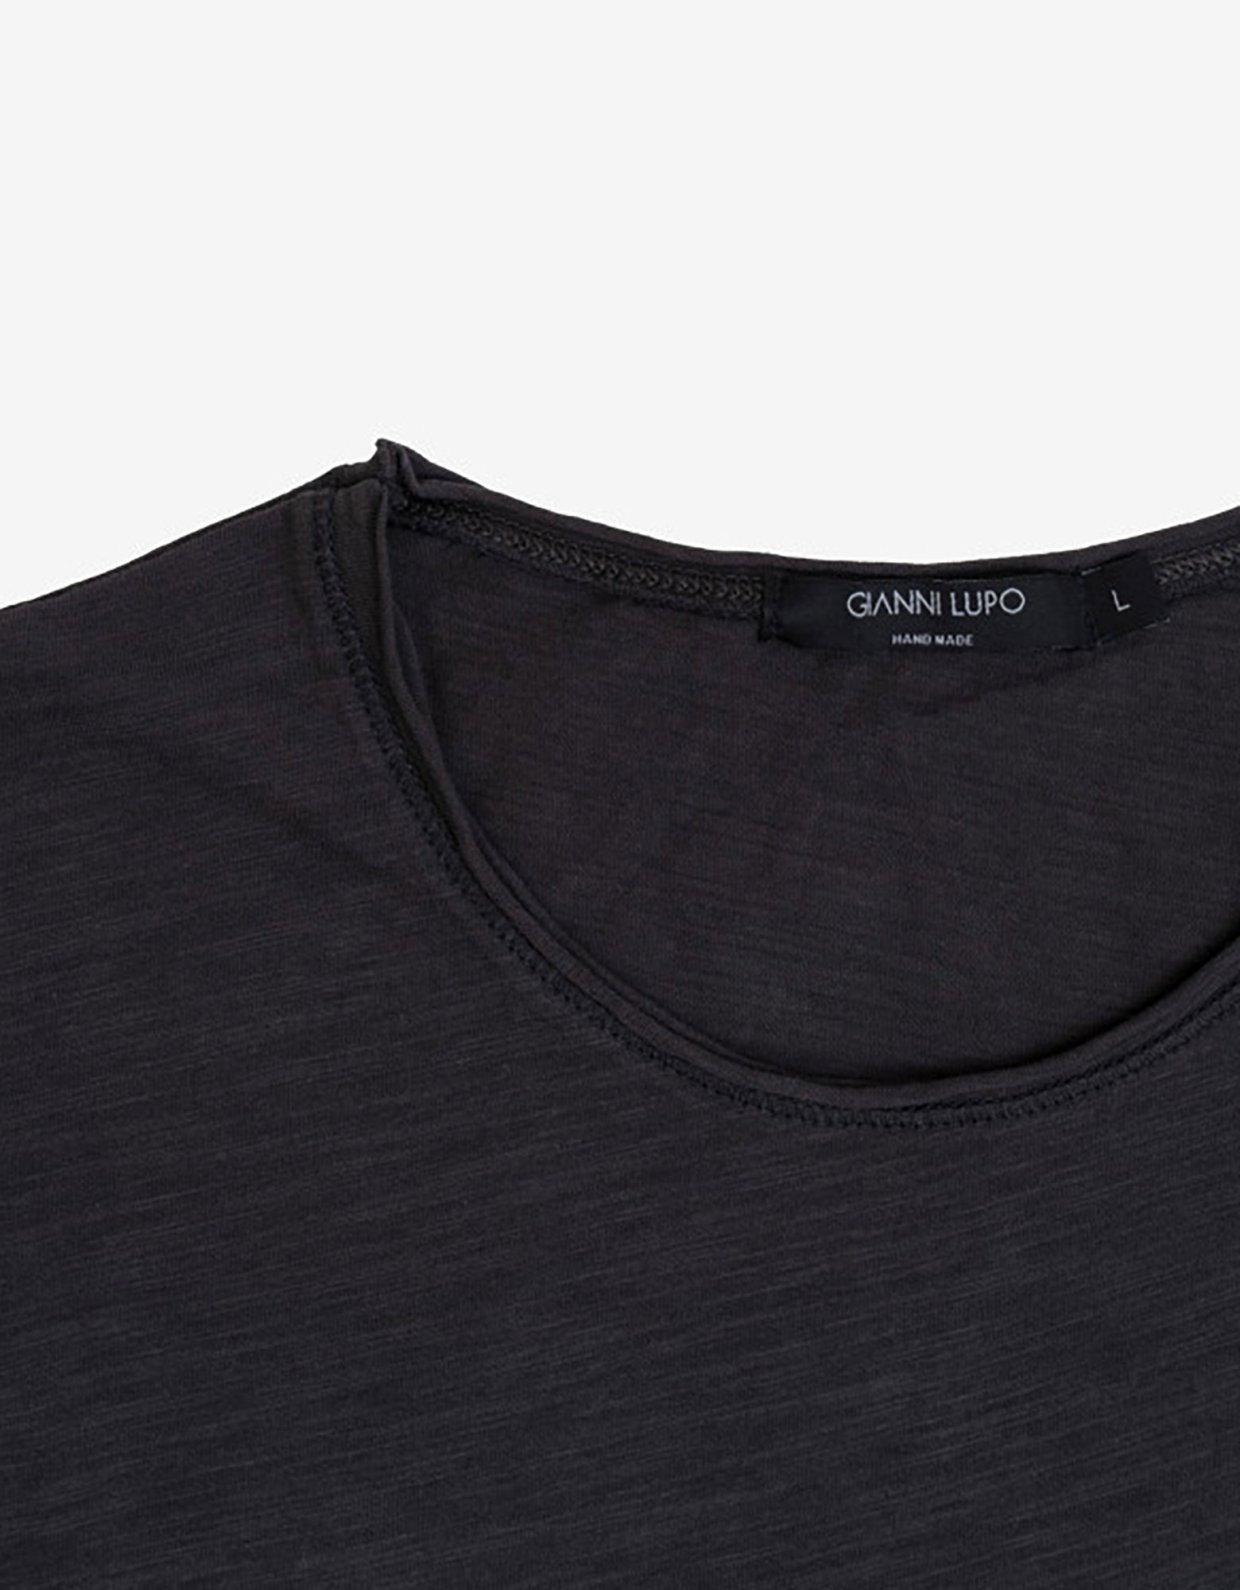 Gianni Lupo T-shirt black